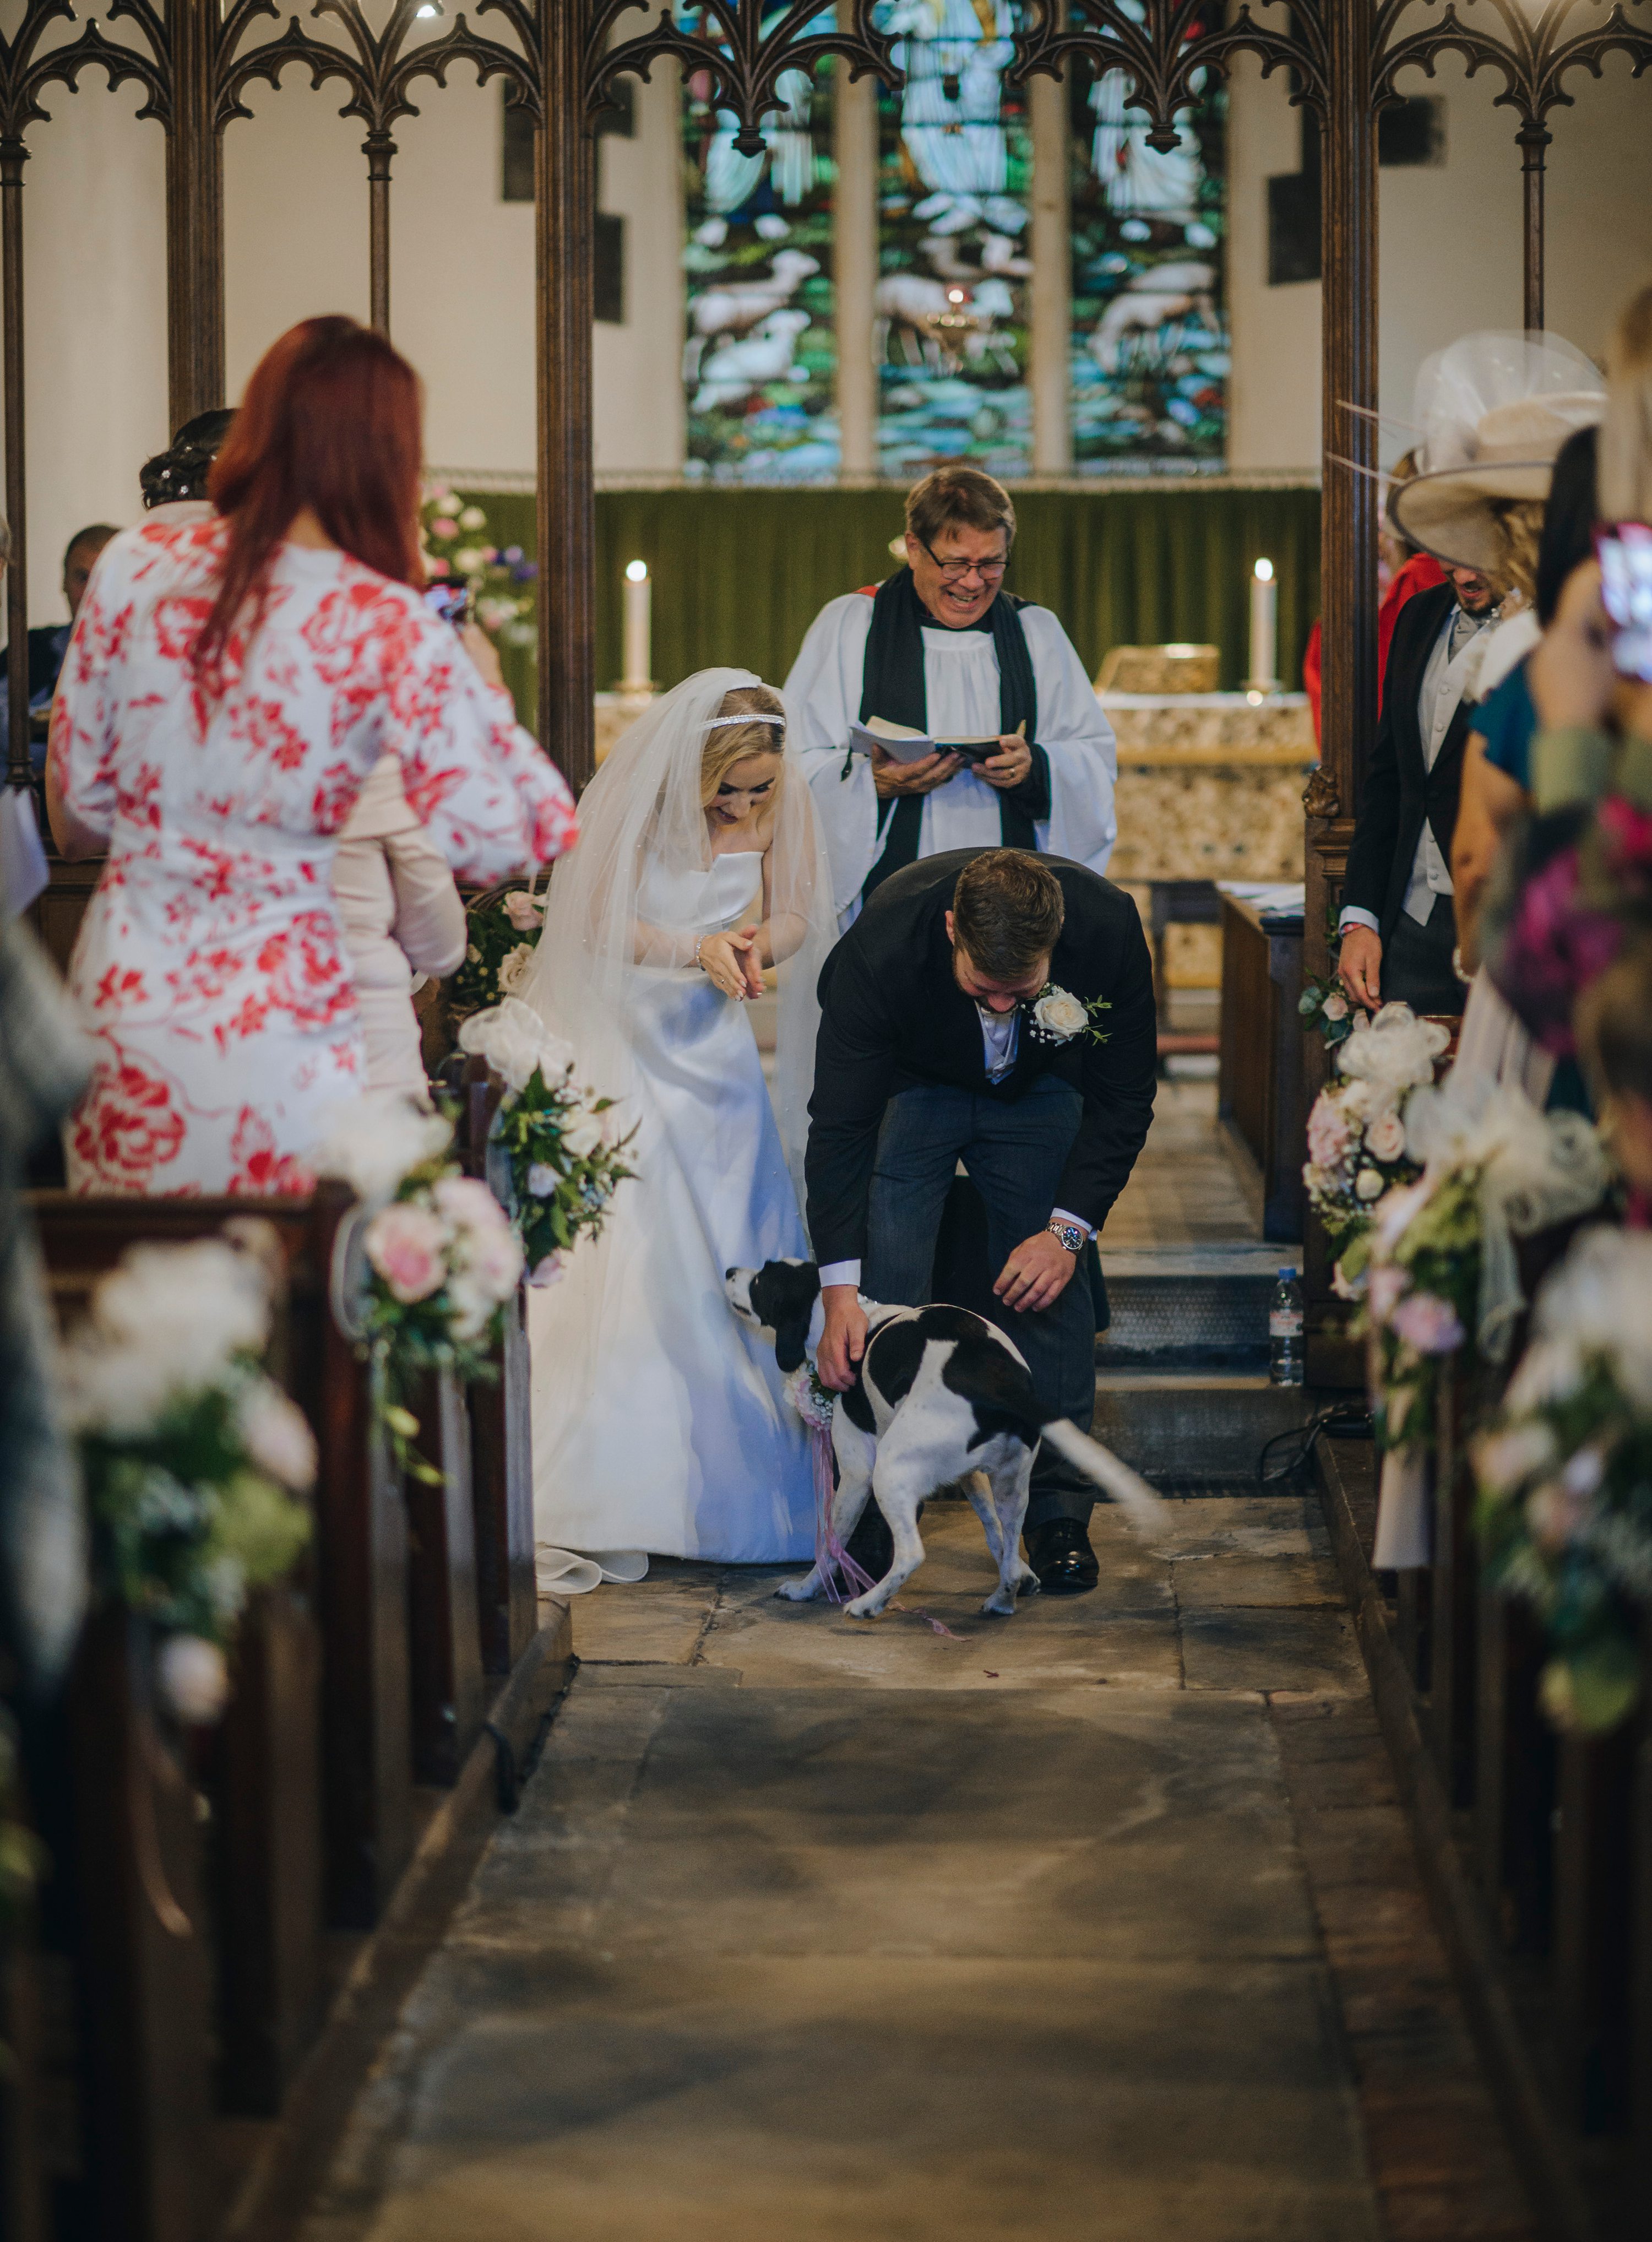 Bagden Hall Wedding Photos,reportage wedding photography,St Peter's Church, Tankersley wedding photo,dog ring bearer